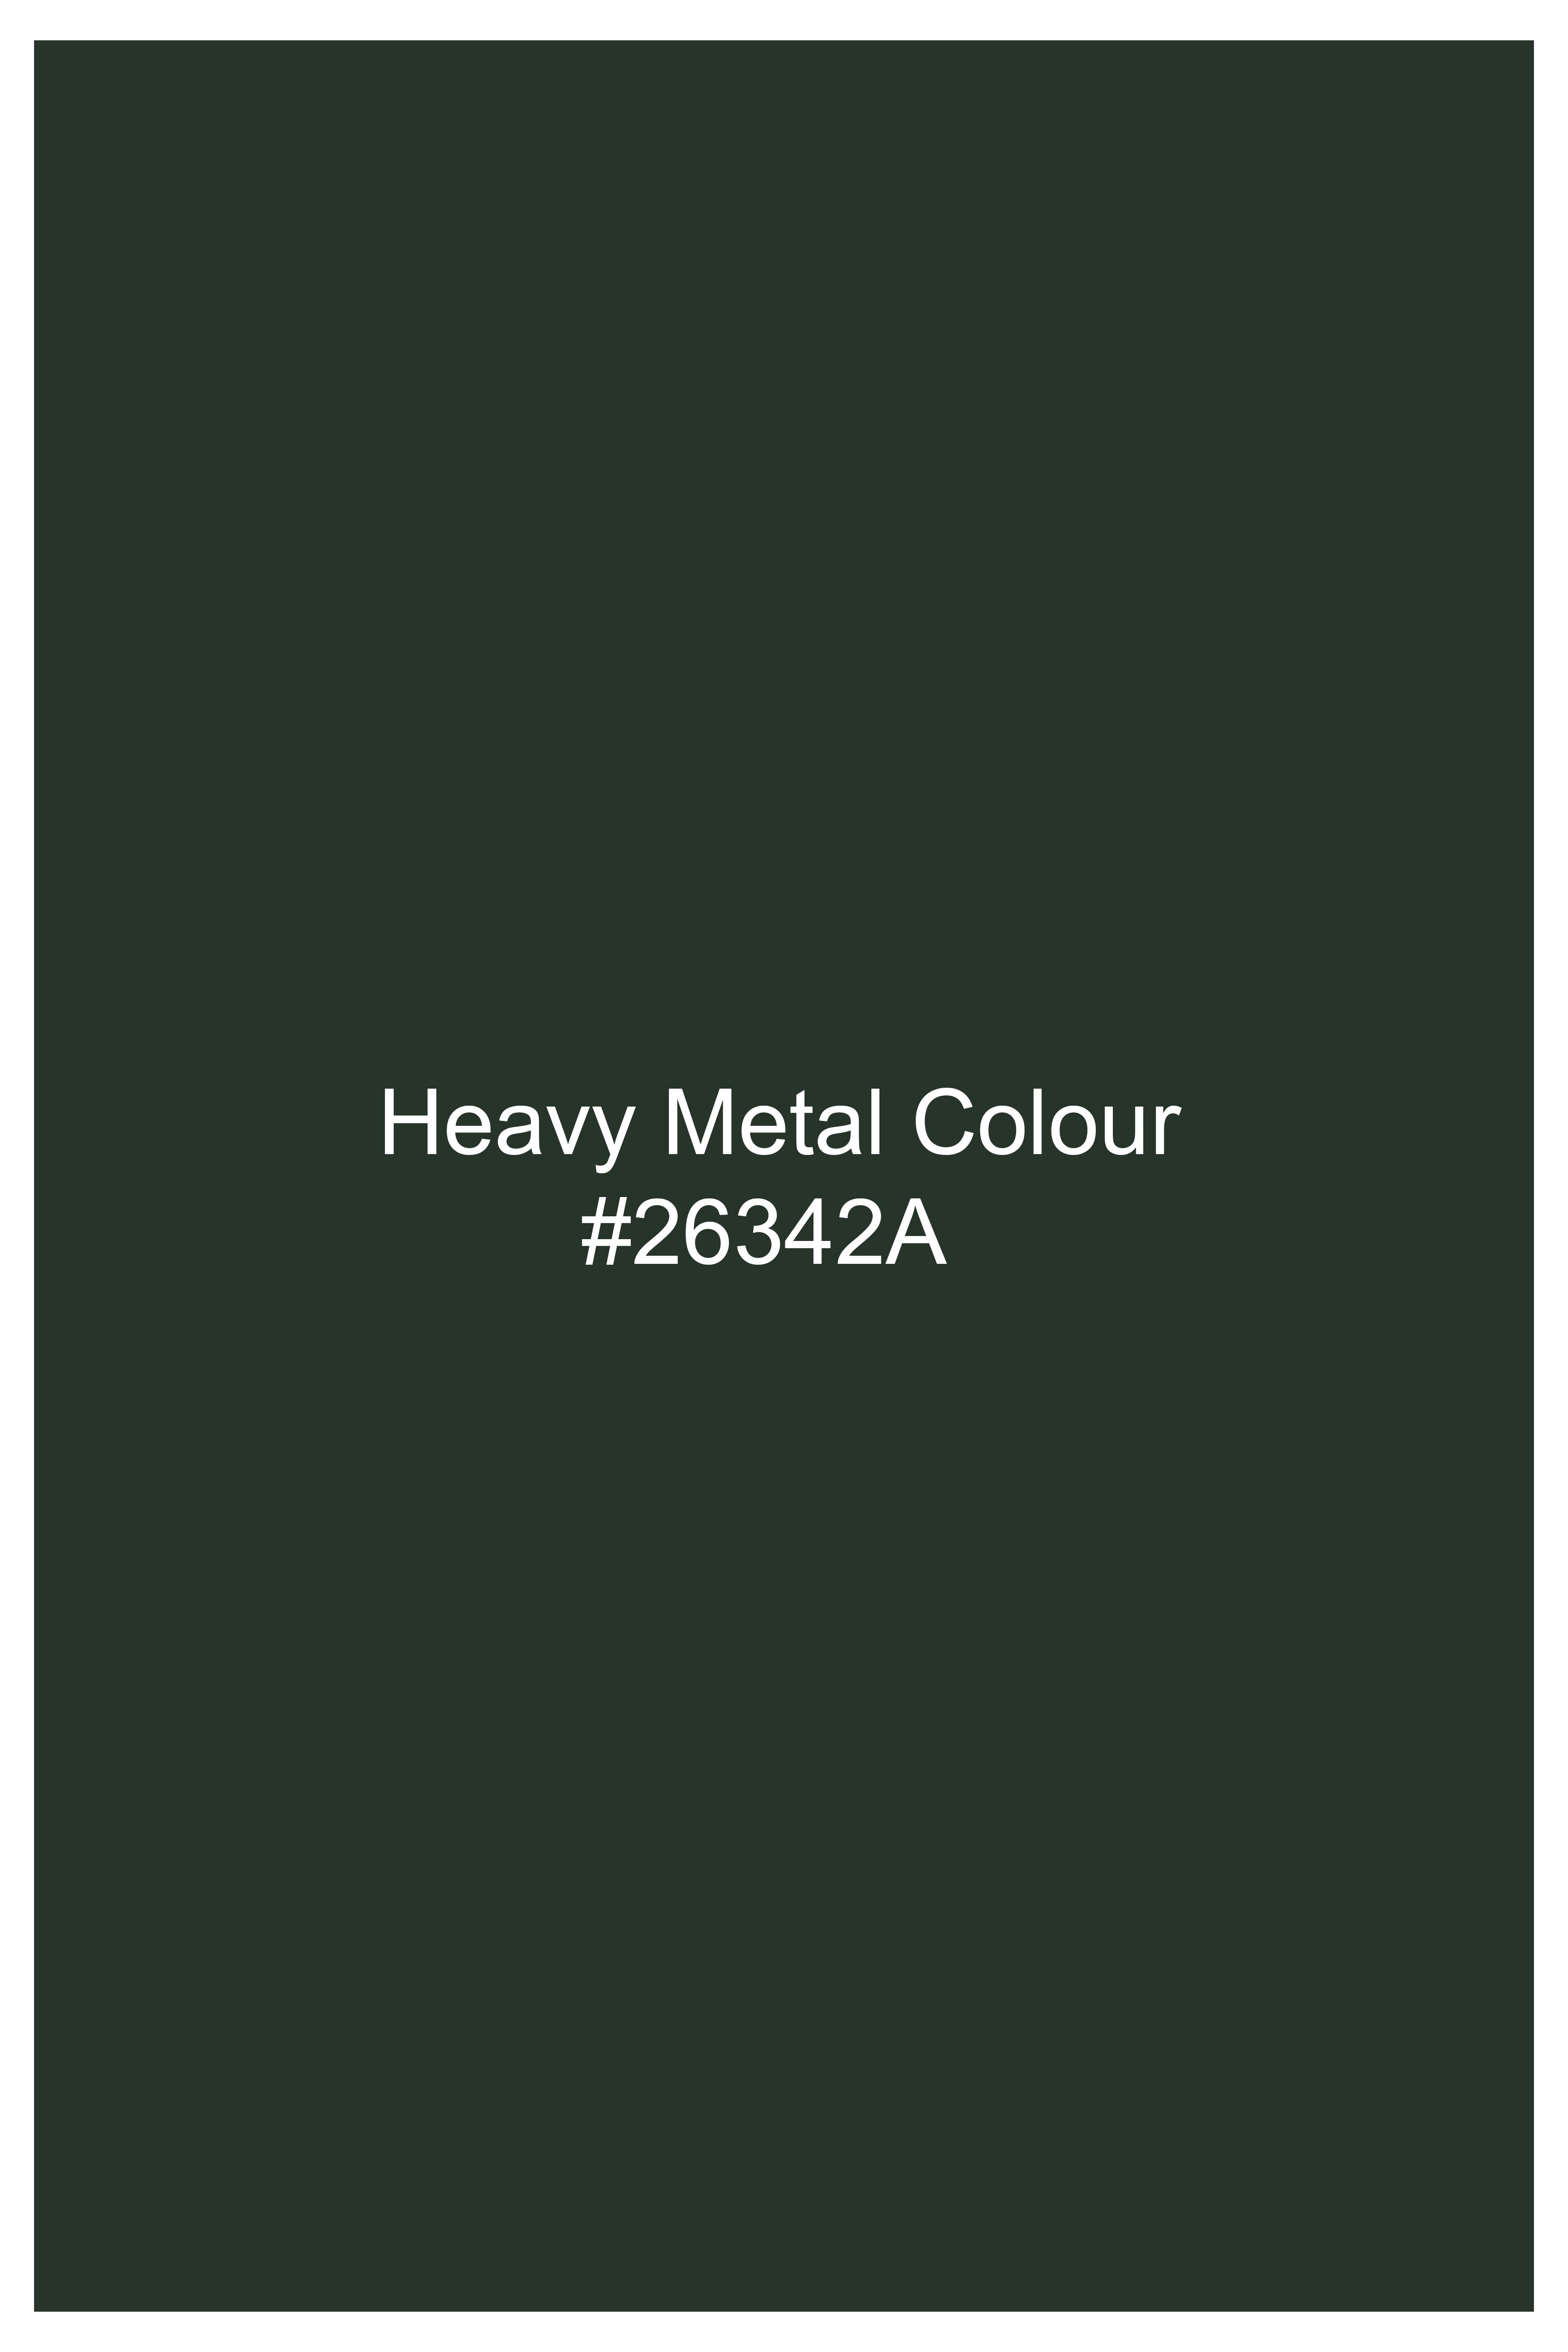 Heavy Metal Green Premium Cotton Tuxedo Stretchable traveler Suit ST2775-BKL-36, ST2775-BKL-38, ST2775-BKL-40, ST2775-BKL-42, ST2775-BKL-44, ST2775-BKL-46, ST2775-BKL-48, ST2775-BKL-50, ST2775-BKL-52, ST2775-BKL-54, ST2775-BKL-56, ST2775-BKL-58, ST2775-BKL-60